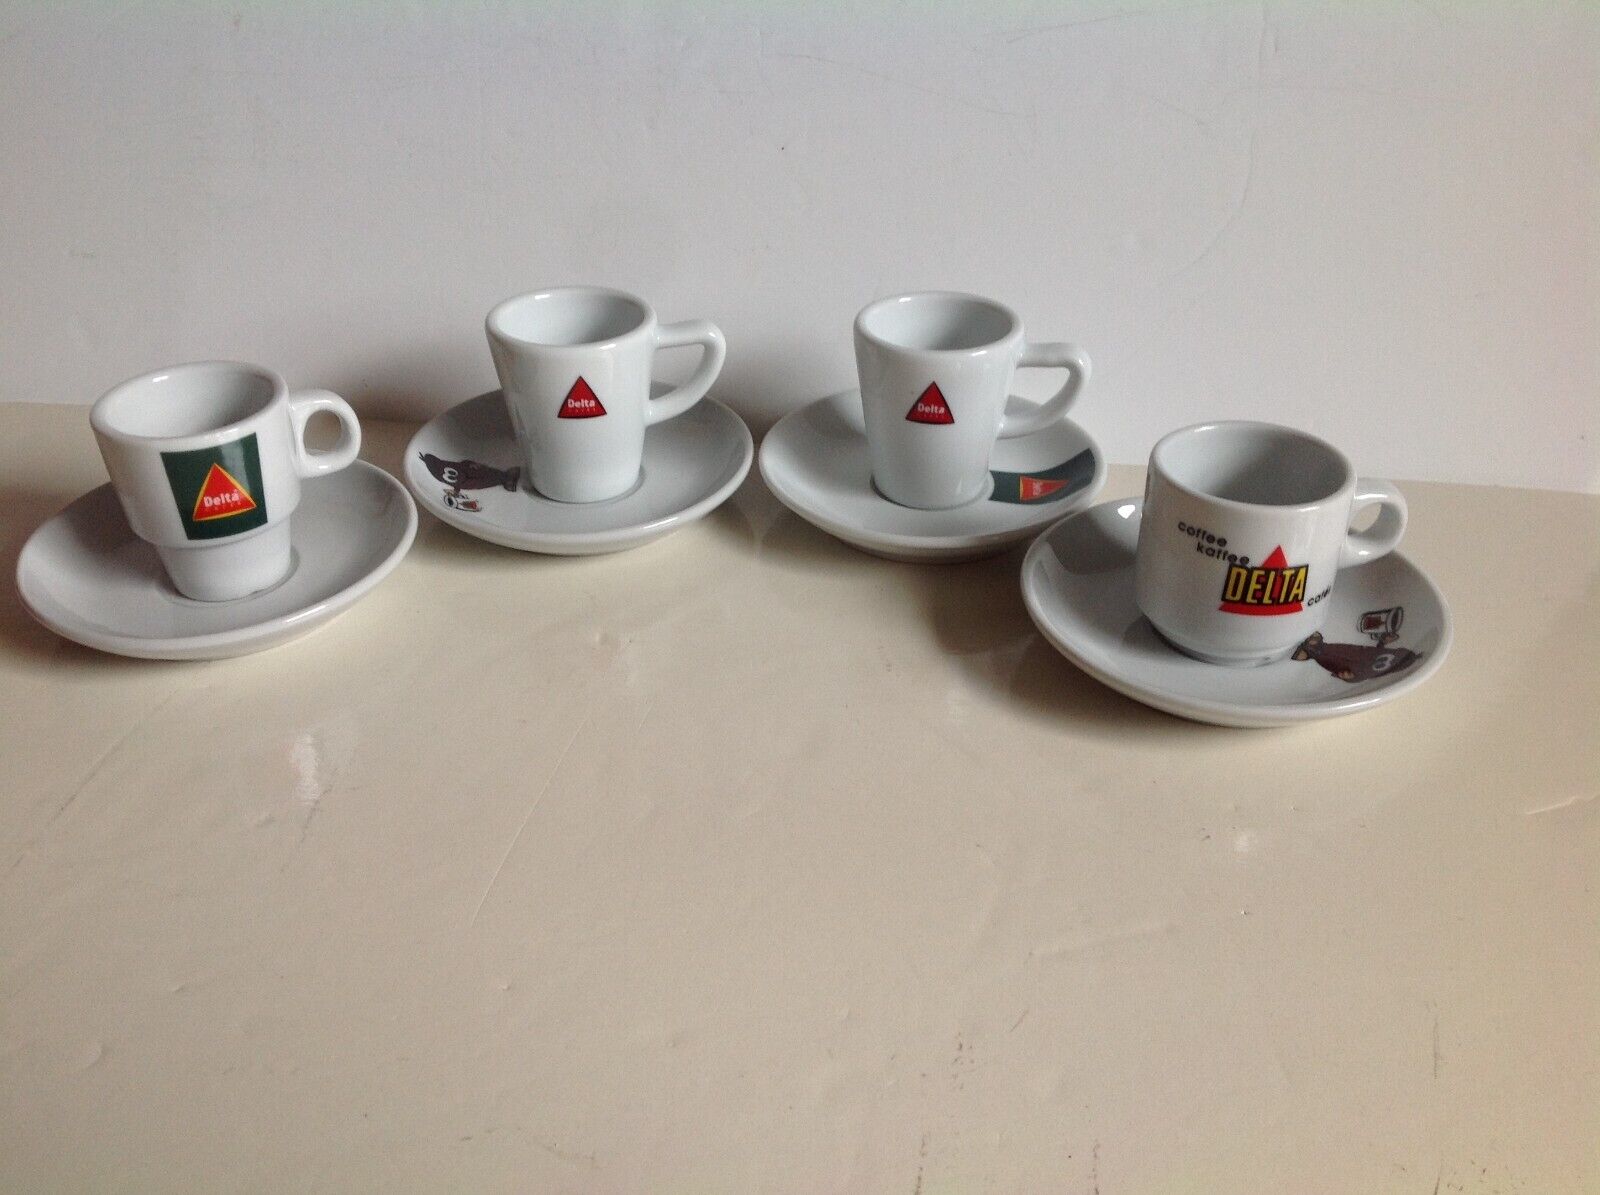 4 Vintage Delta Espresso Coffee Cups and Saucers Portuguese